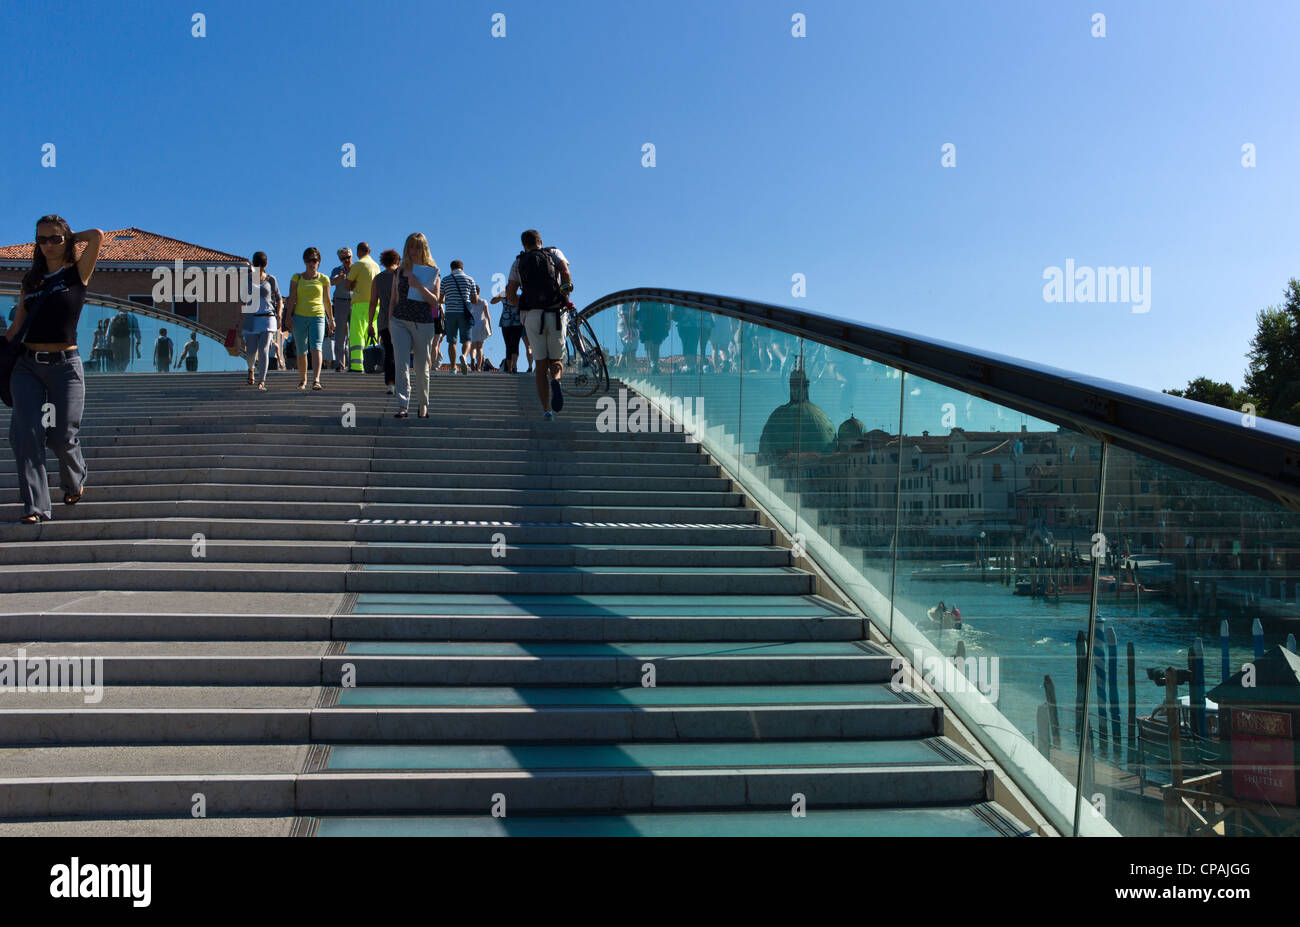 Italy, Venice, people on the Calatrava bridge in Piazzale Roma area Stock Photo